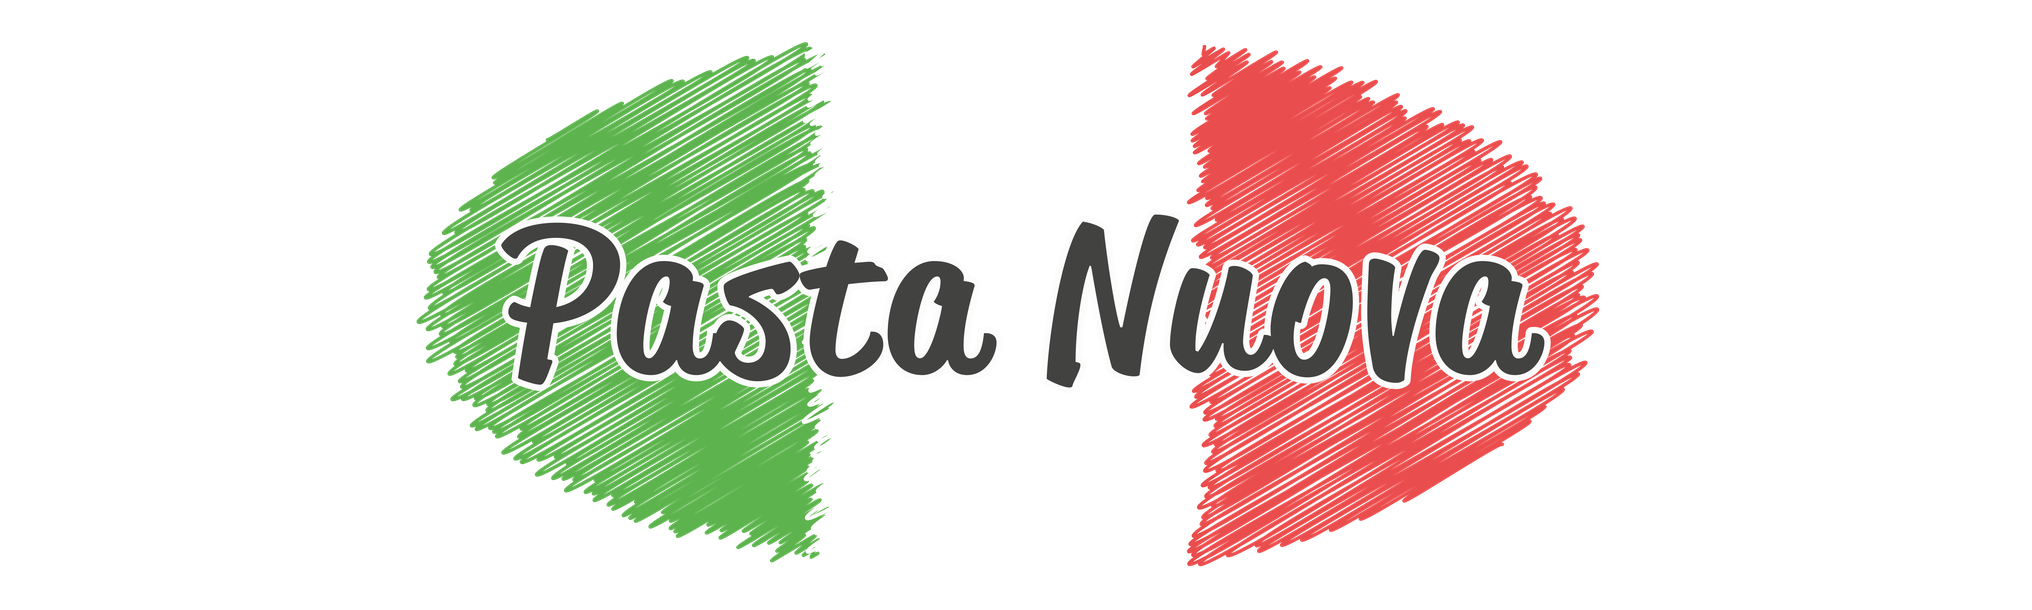 Logo der Marke Pasta Nuova